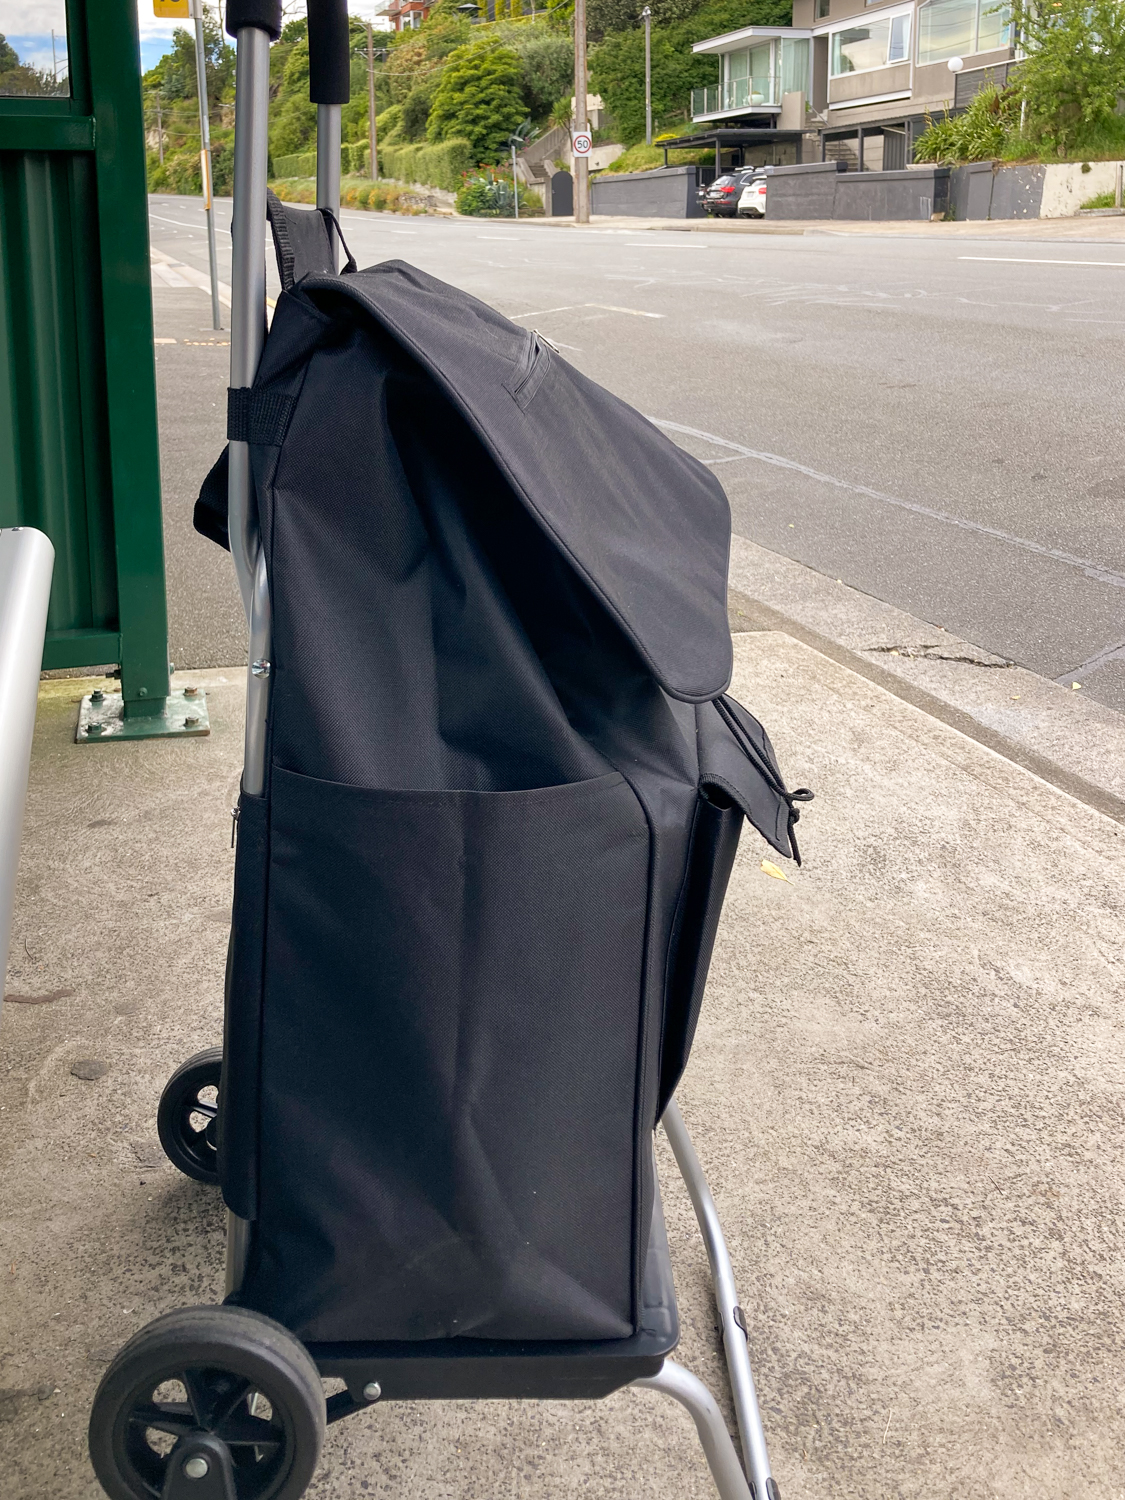 A black wheely shopping bag at a bus stop